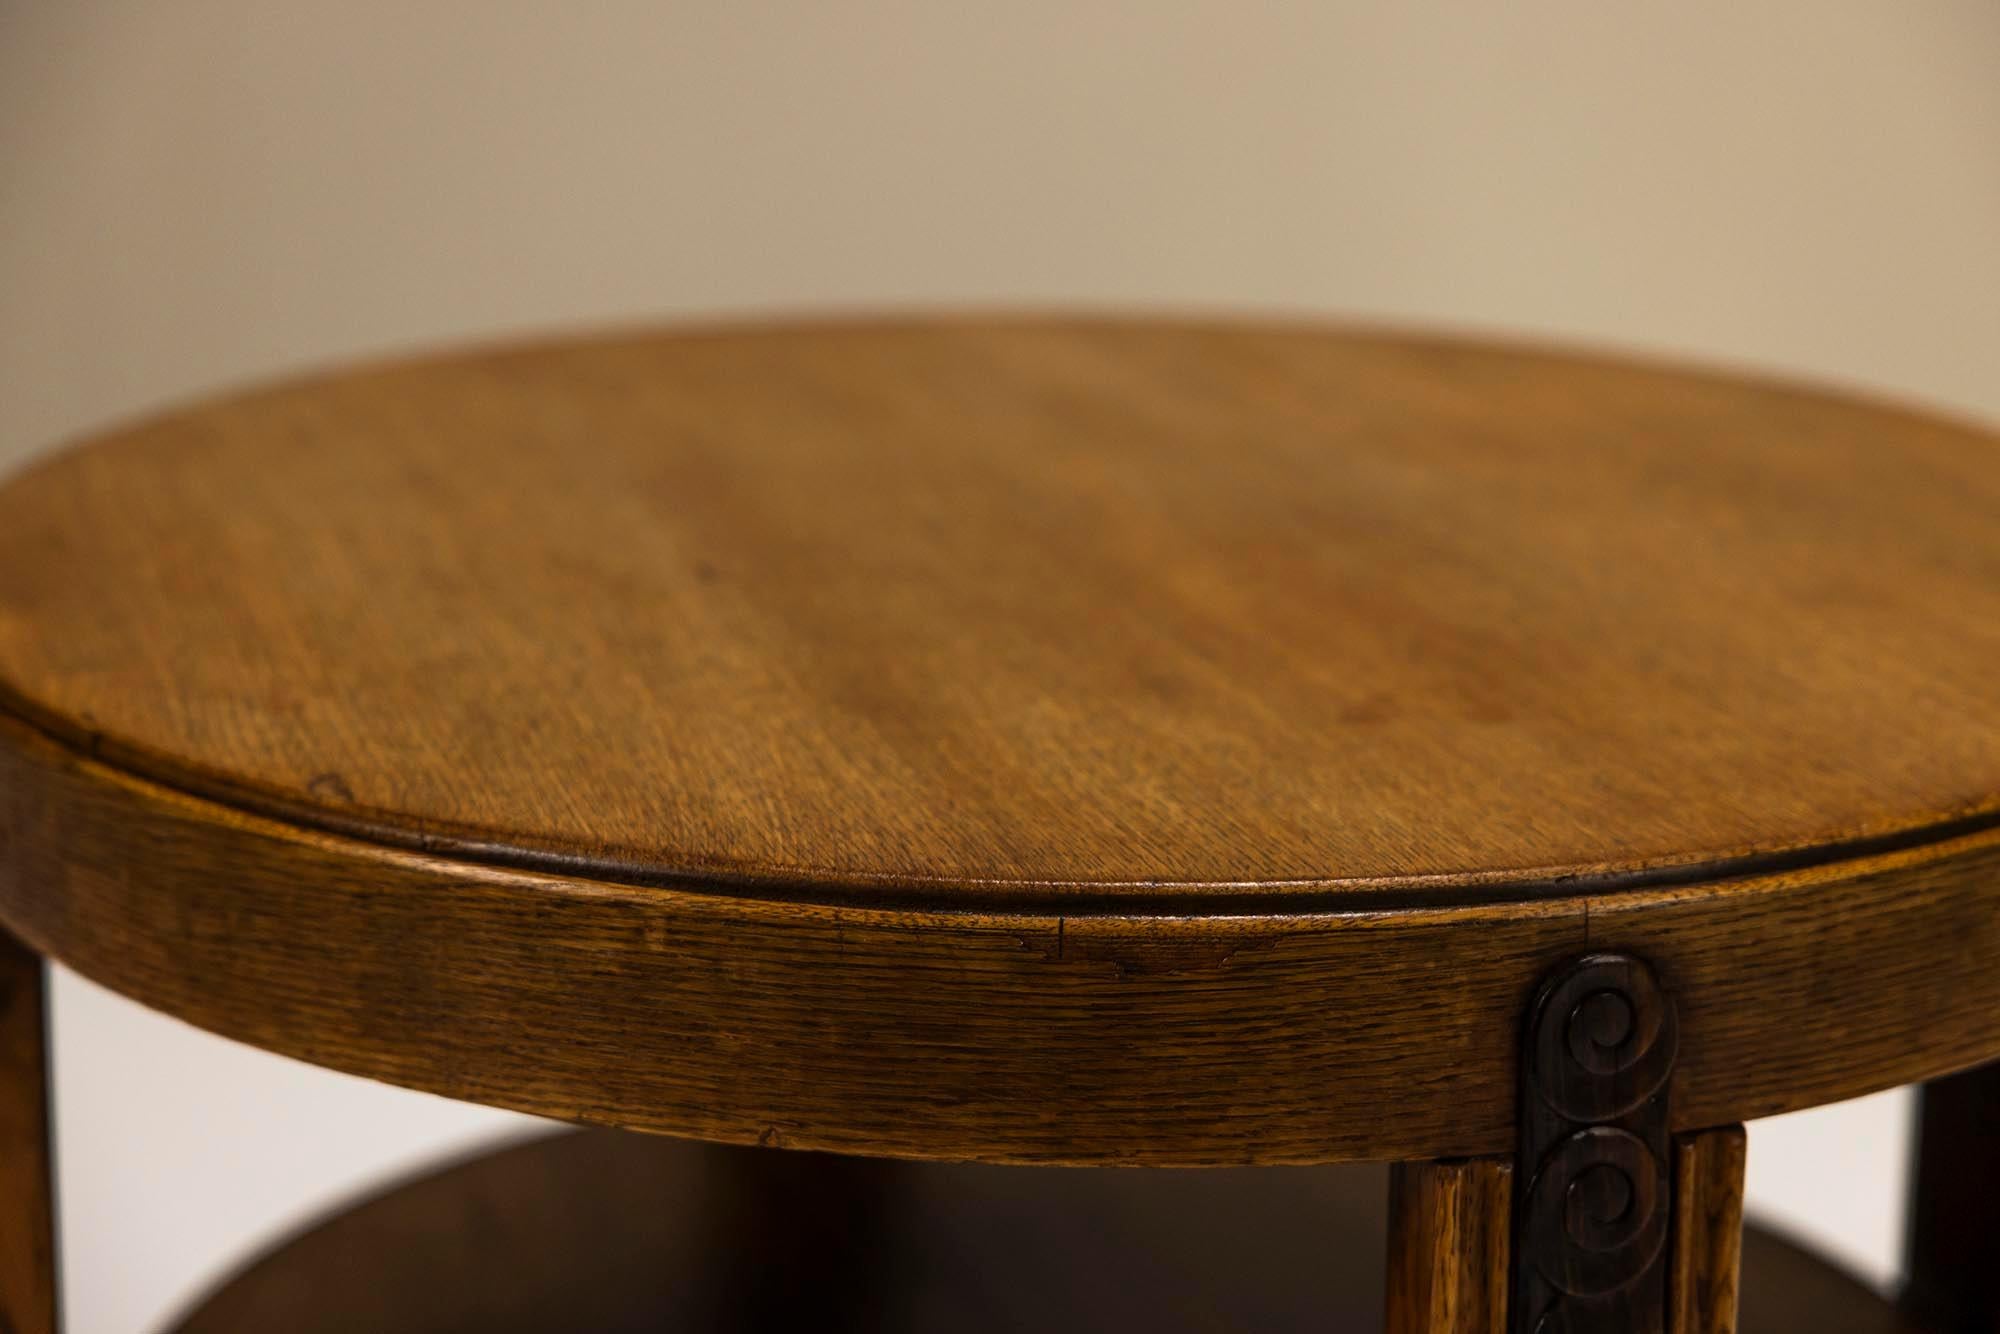 Oak Modernist Dutch Art Deco Coffee Table With Coromandel Details, Netherlands 1930s For Sale